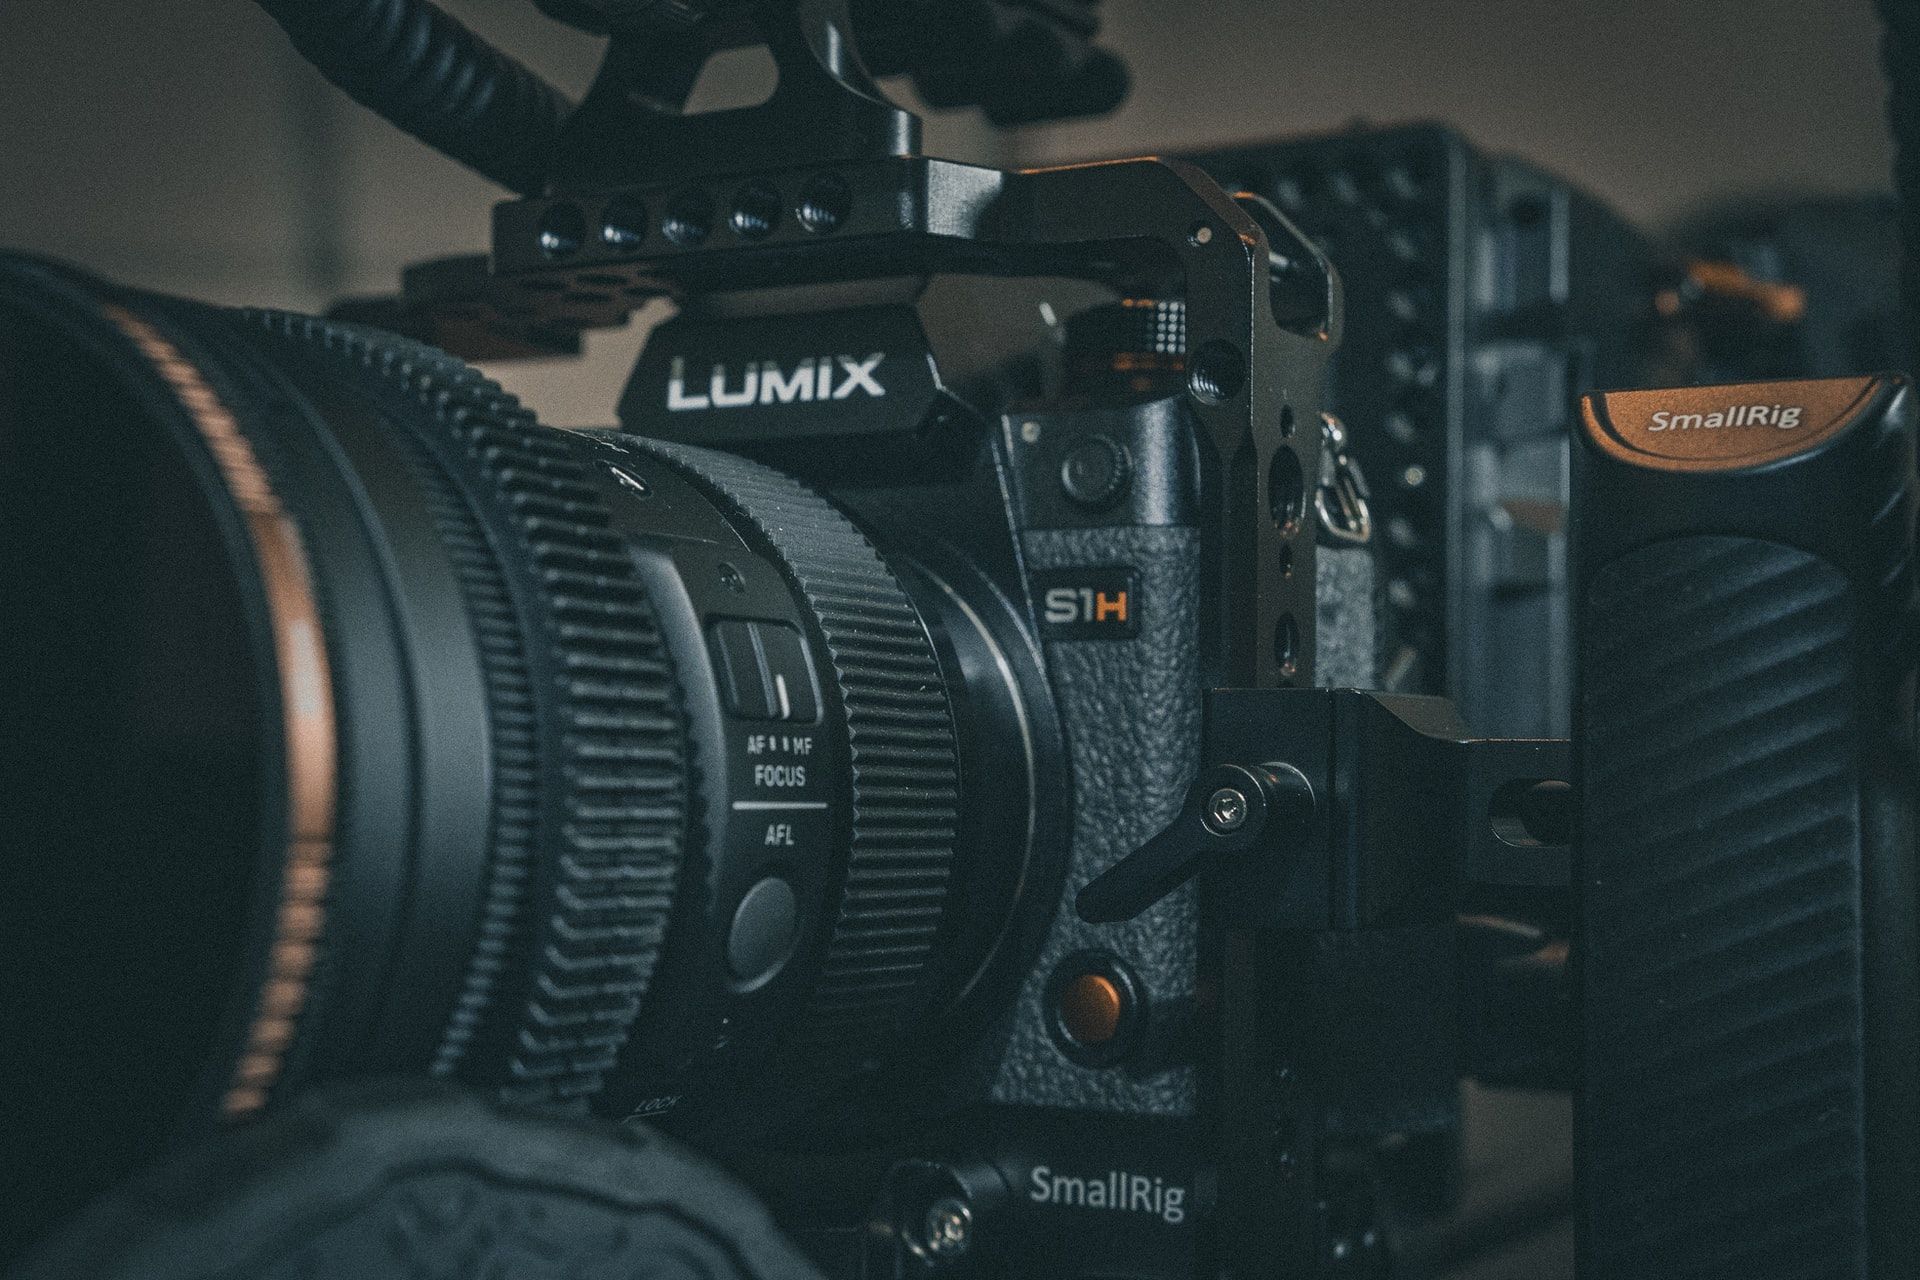 Lumix Panasonic camera